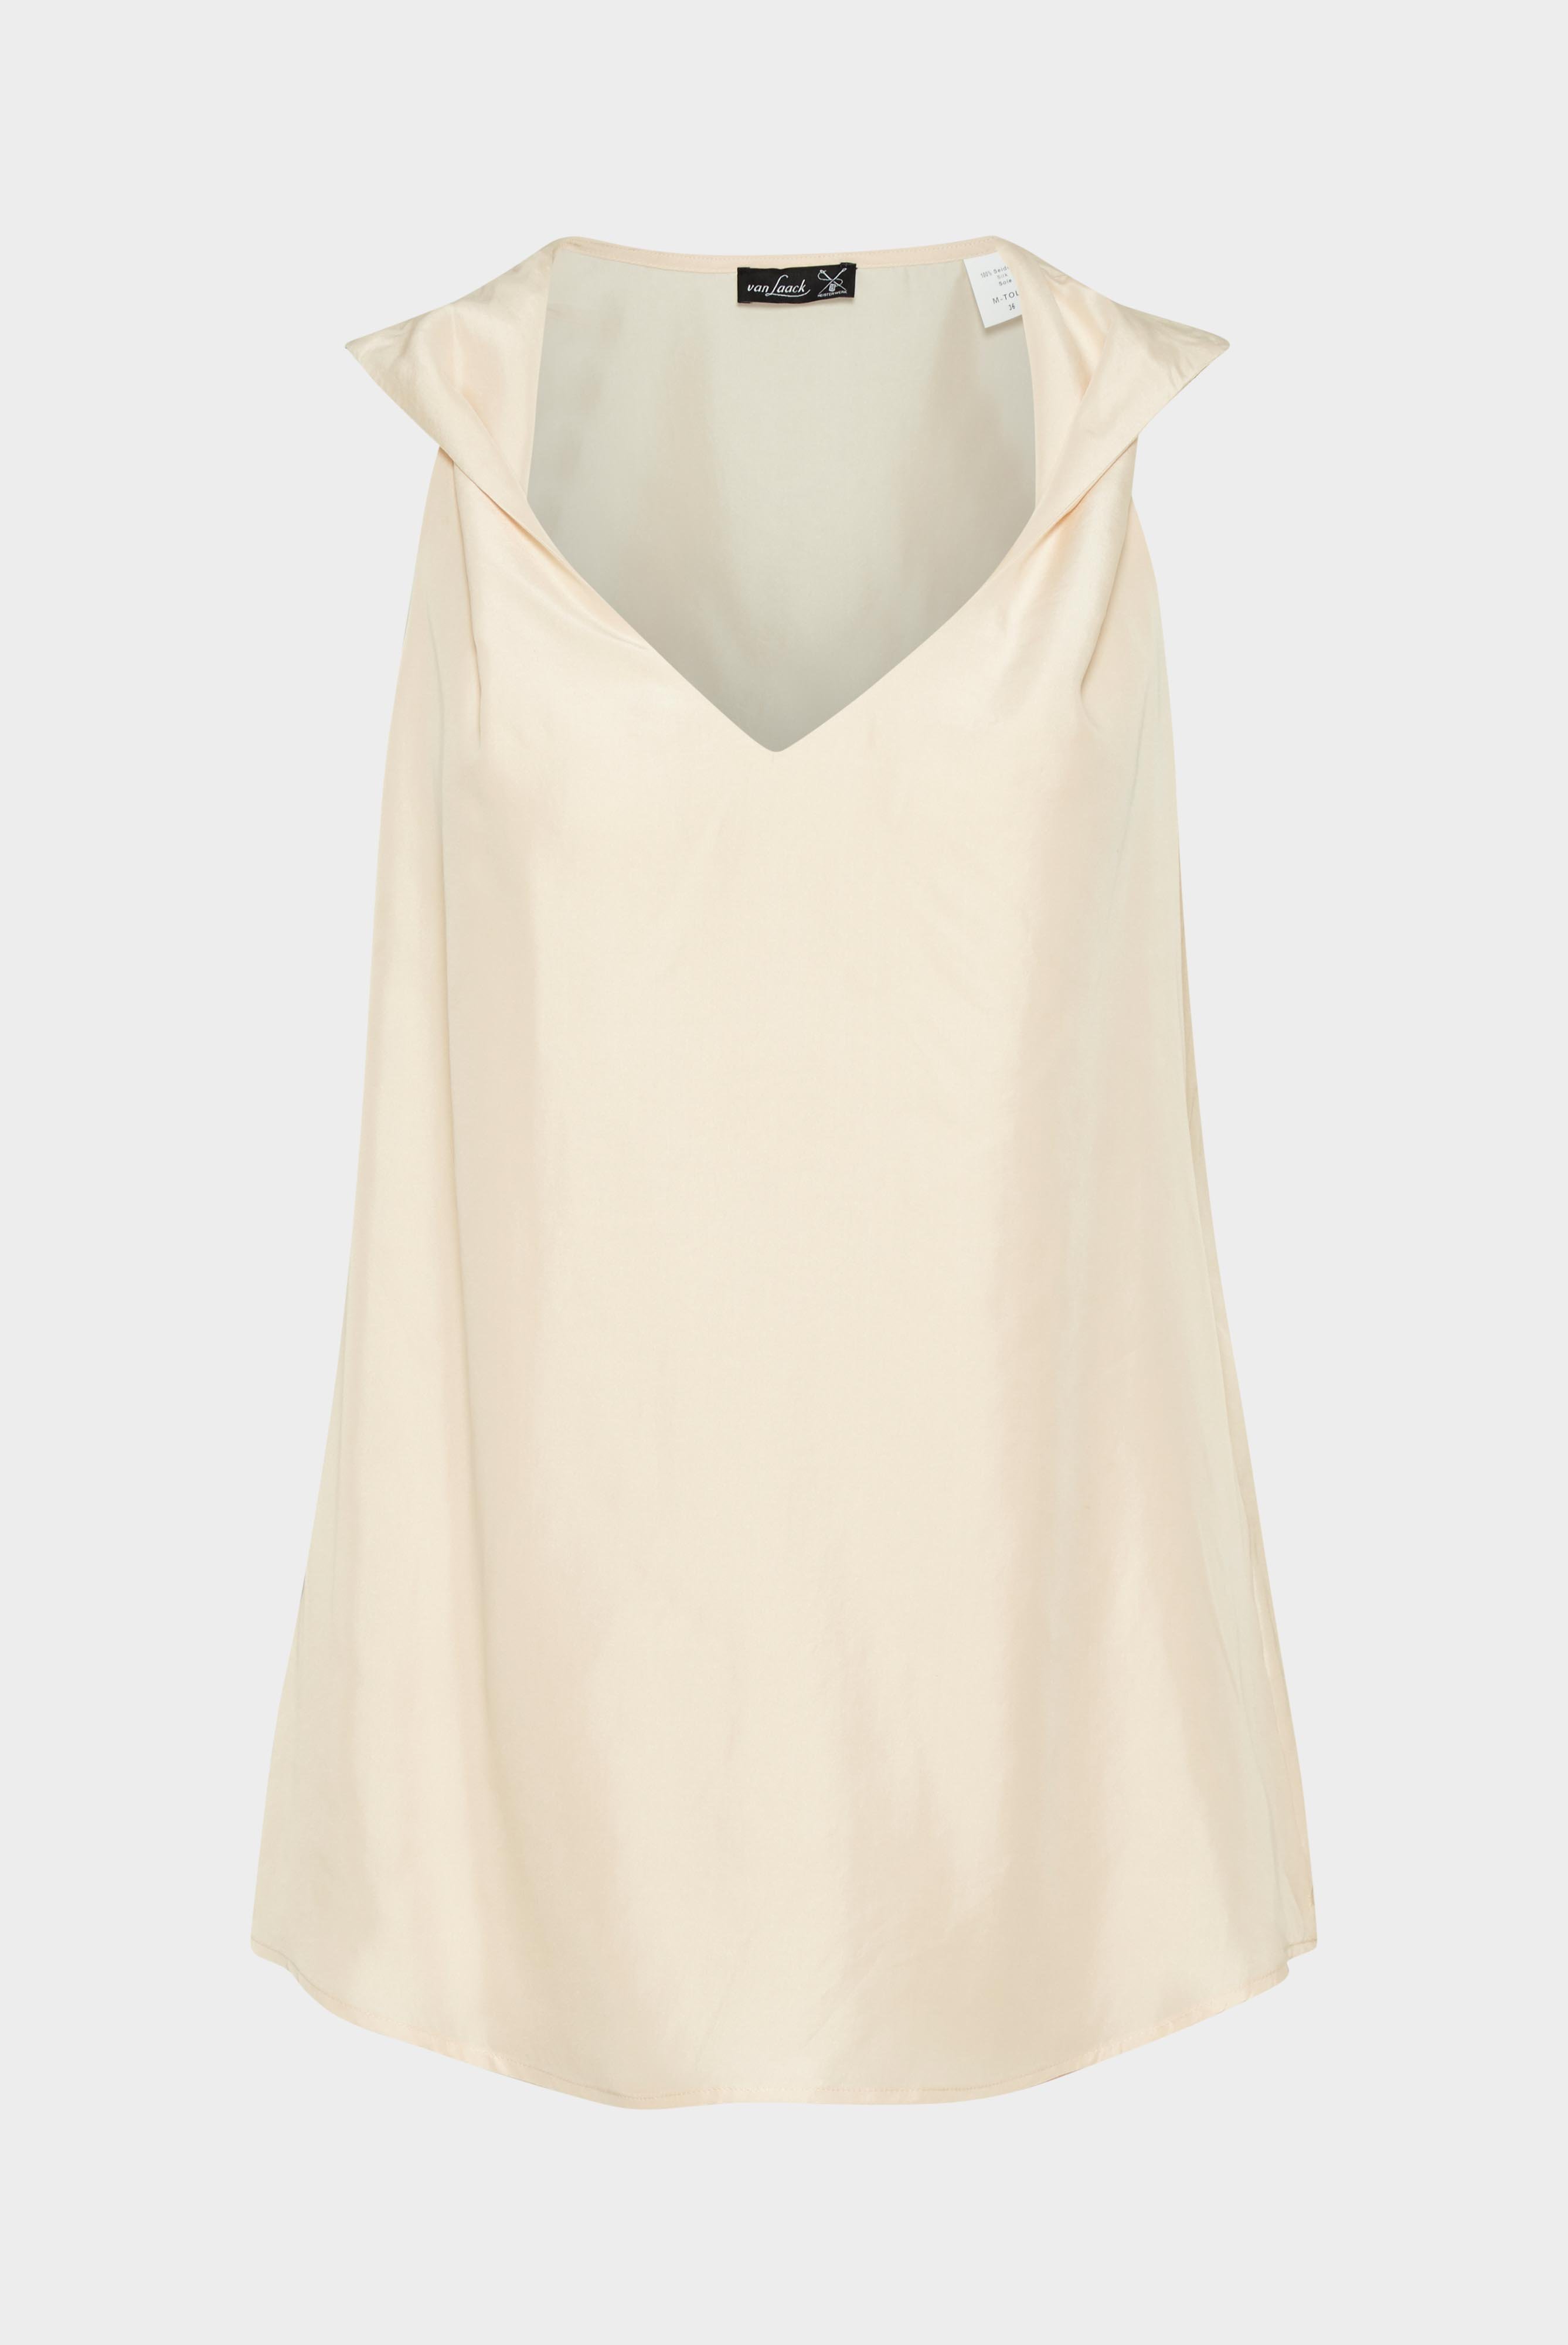 Casual Blouses+Sleeveless blouse in dark habotai silk+05.526A..155530.310.42